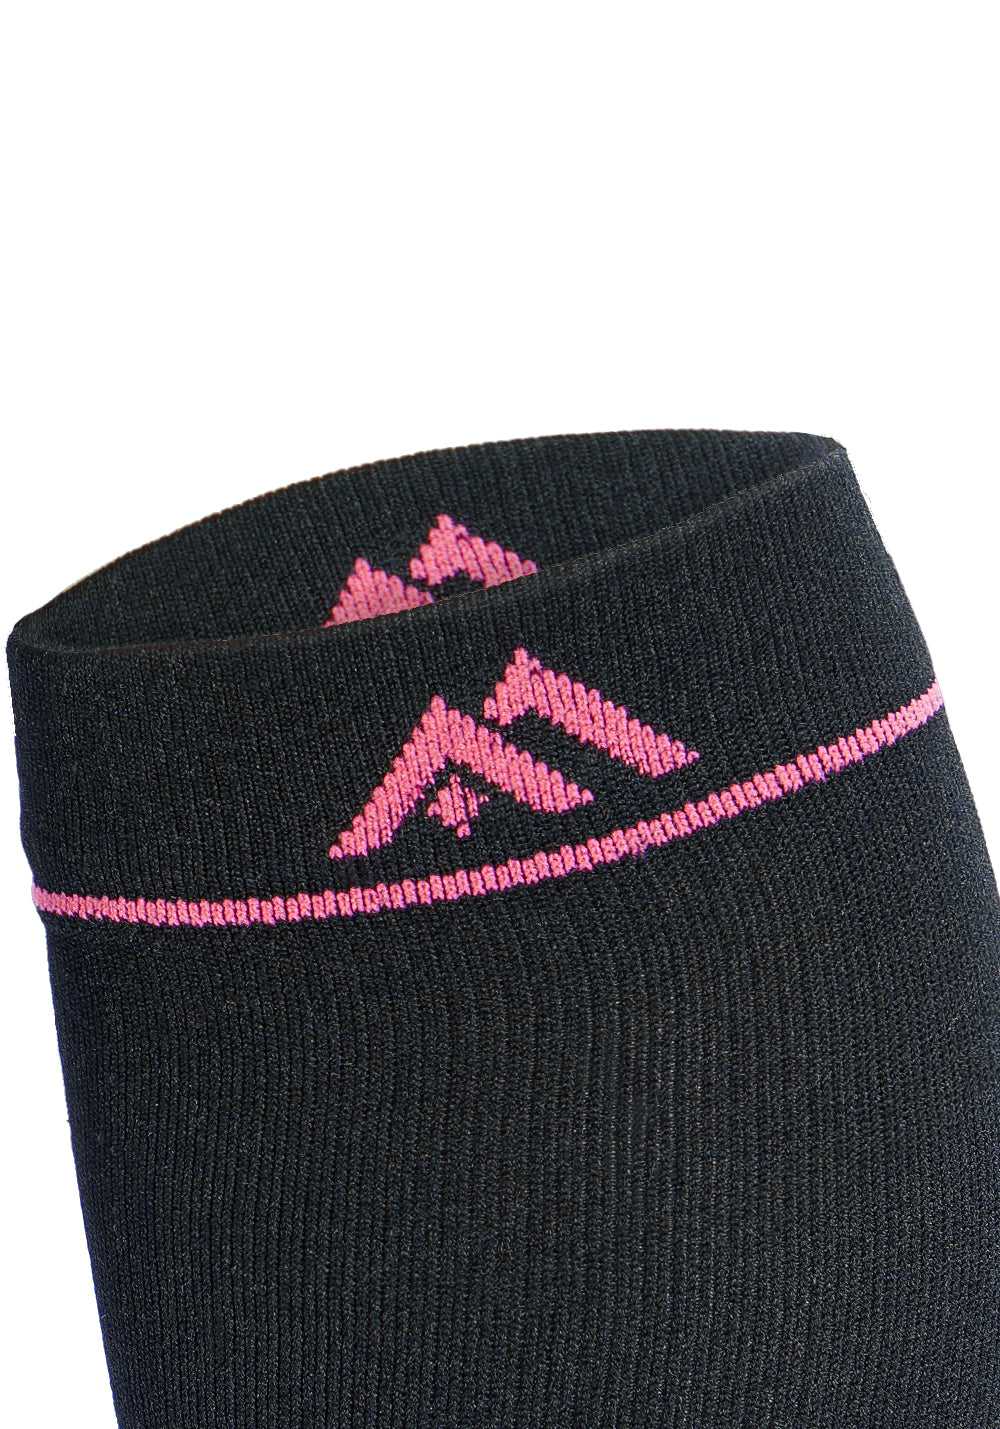 FMF Pink Cool Compression Socks（15-20mmHg）